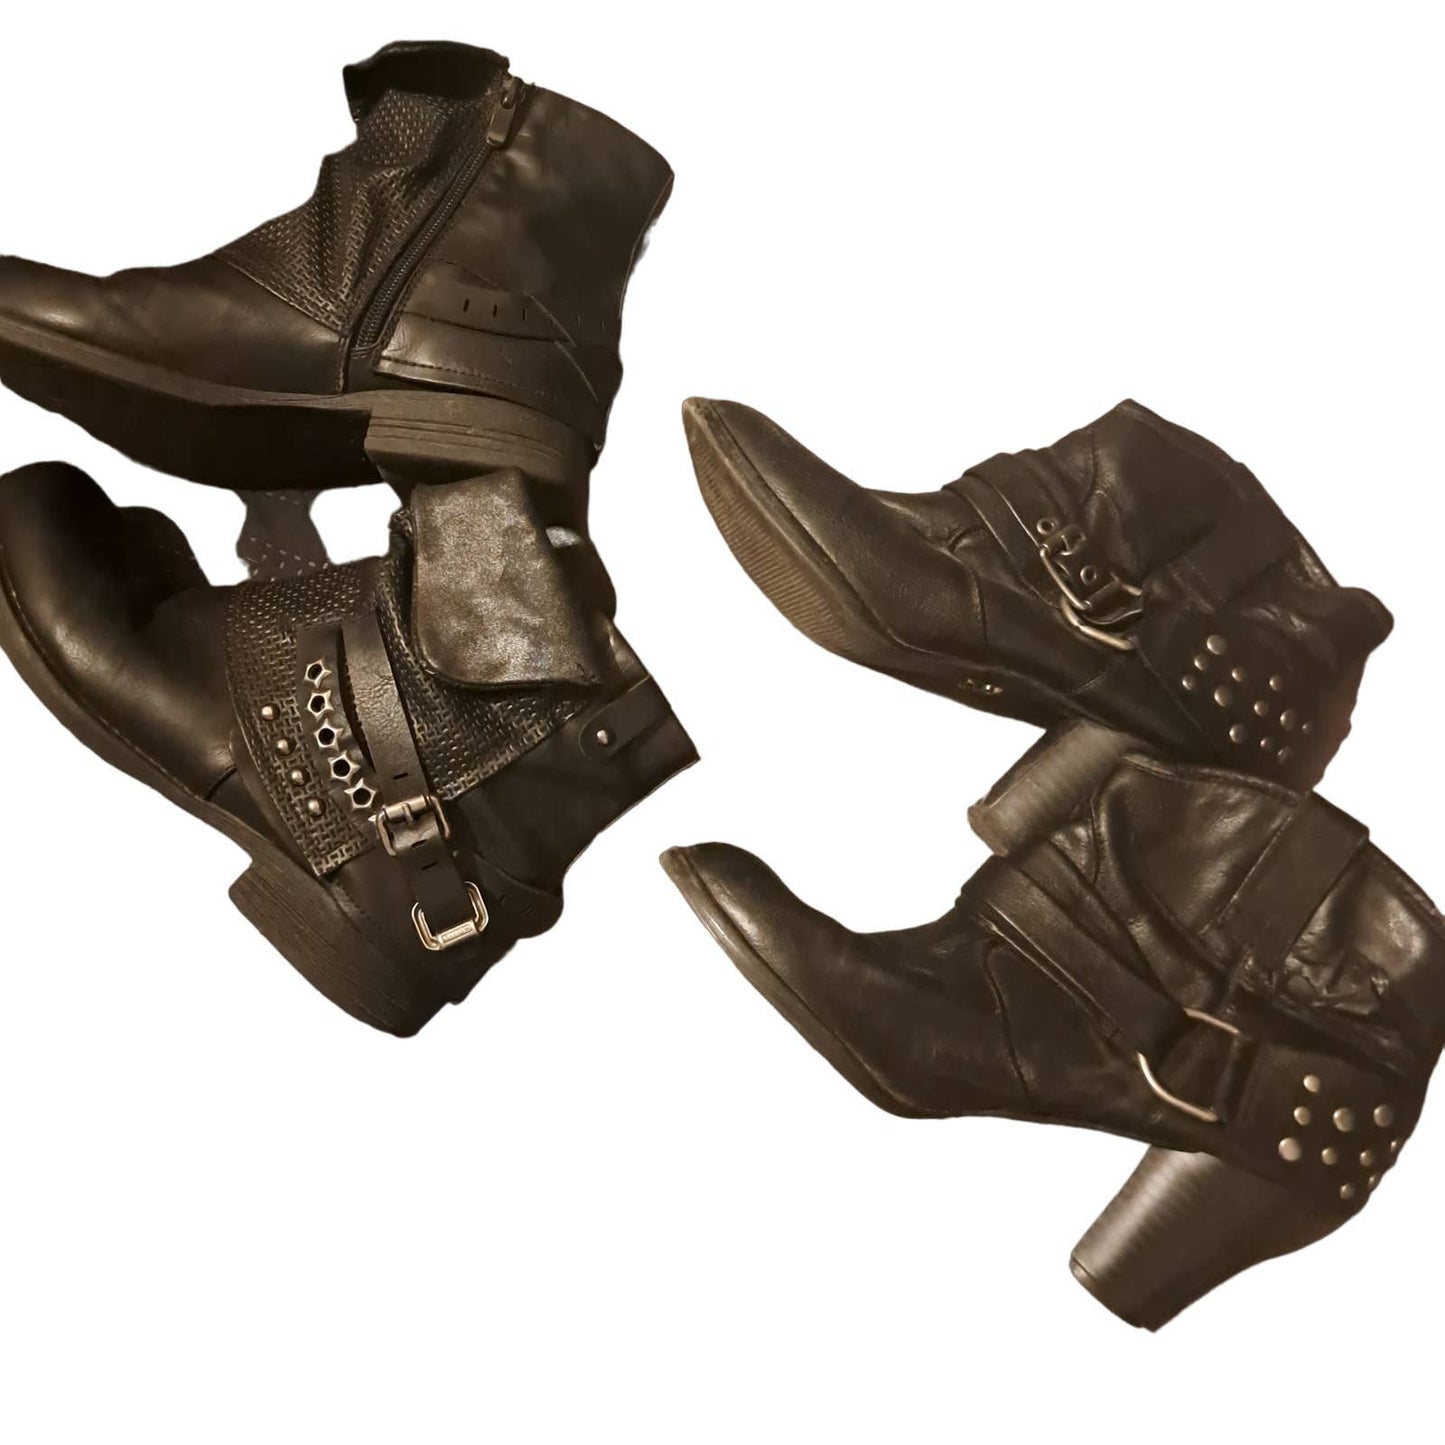 2 Black Rocker ankle Boots size 8 Vera Wang & Elara